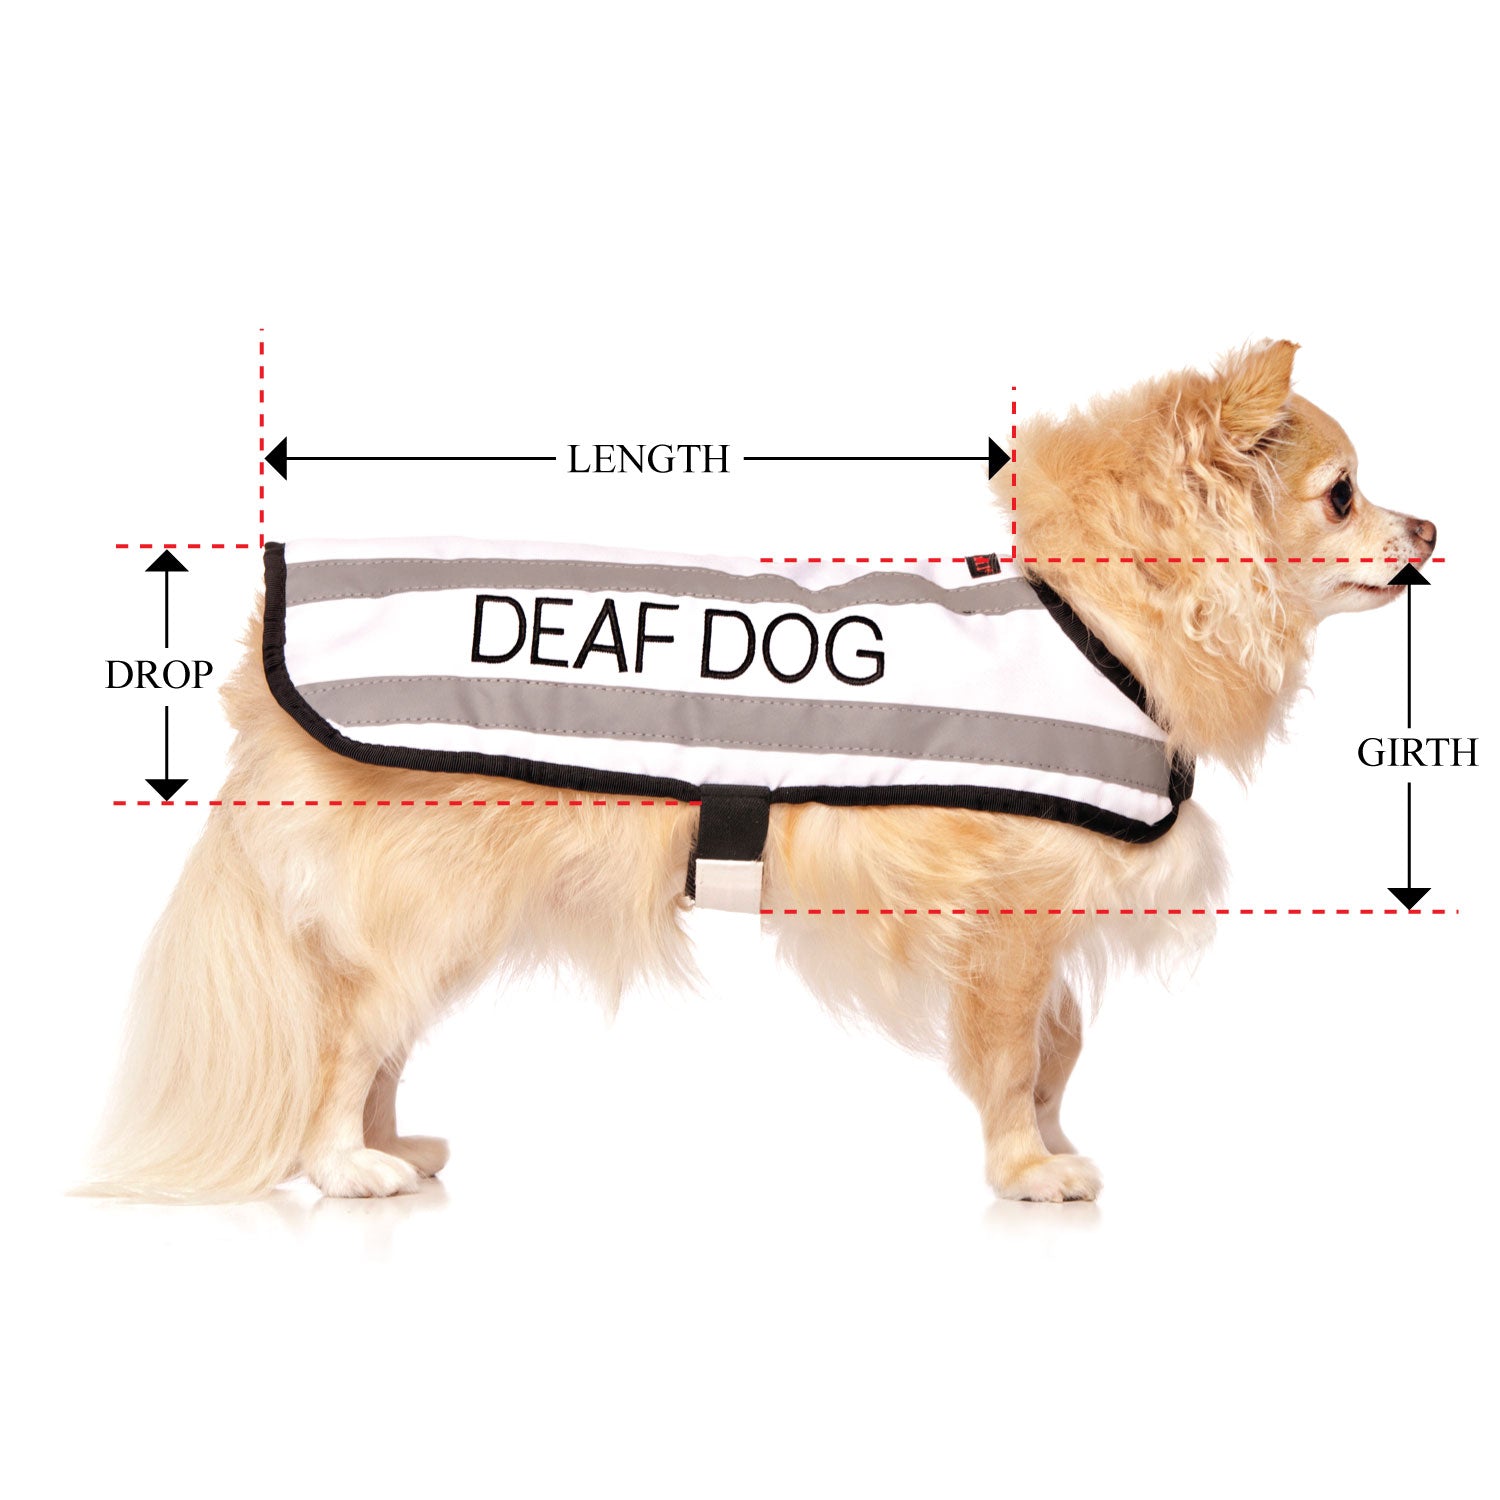 DEAF DOG - Small Coat